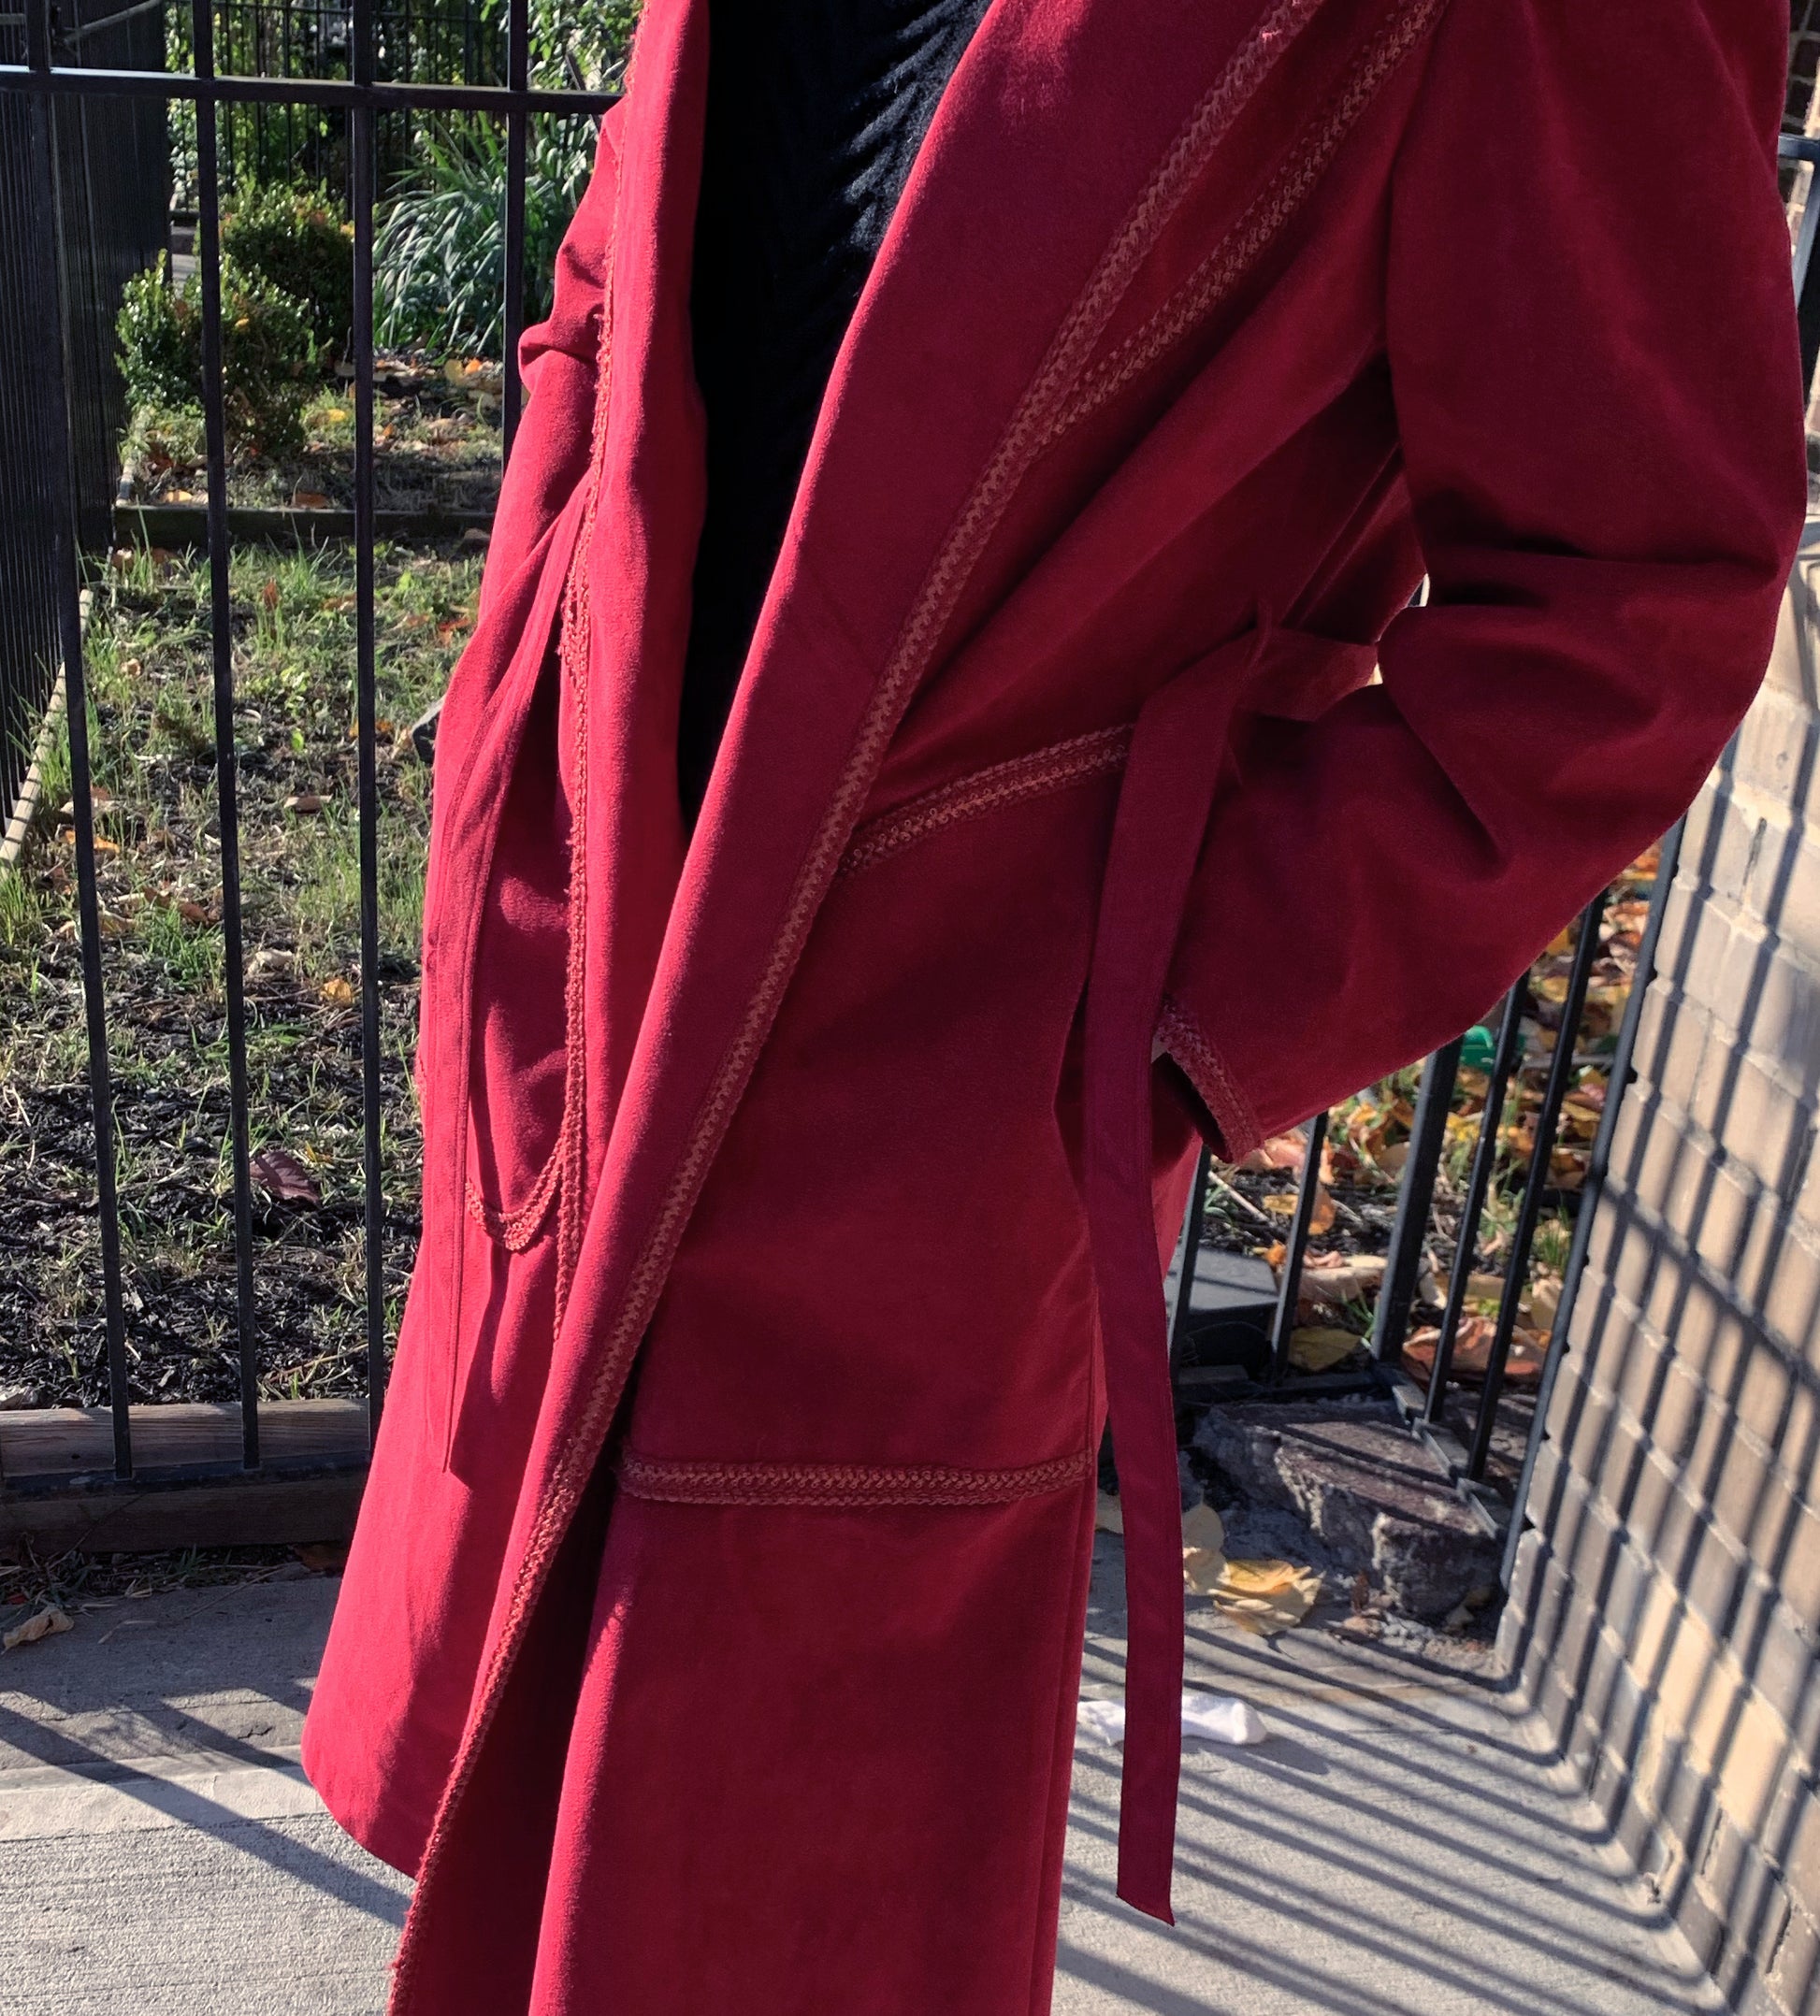 Vintage 1970s suede trench coat